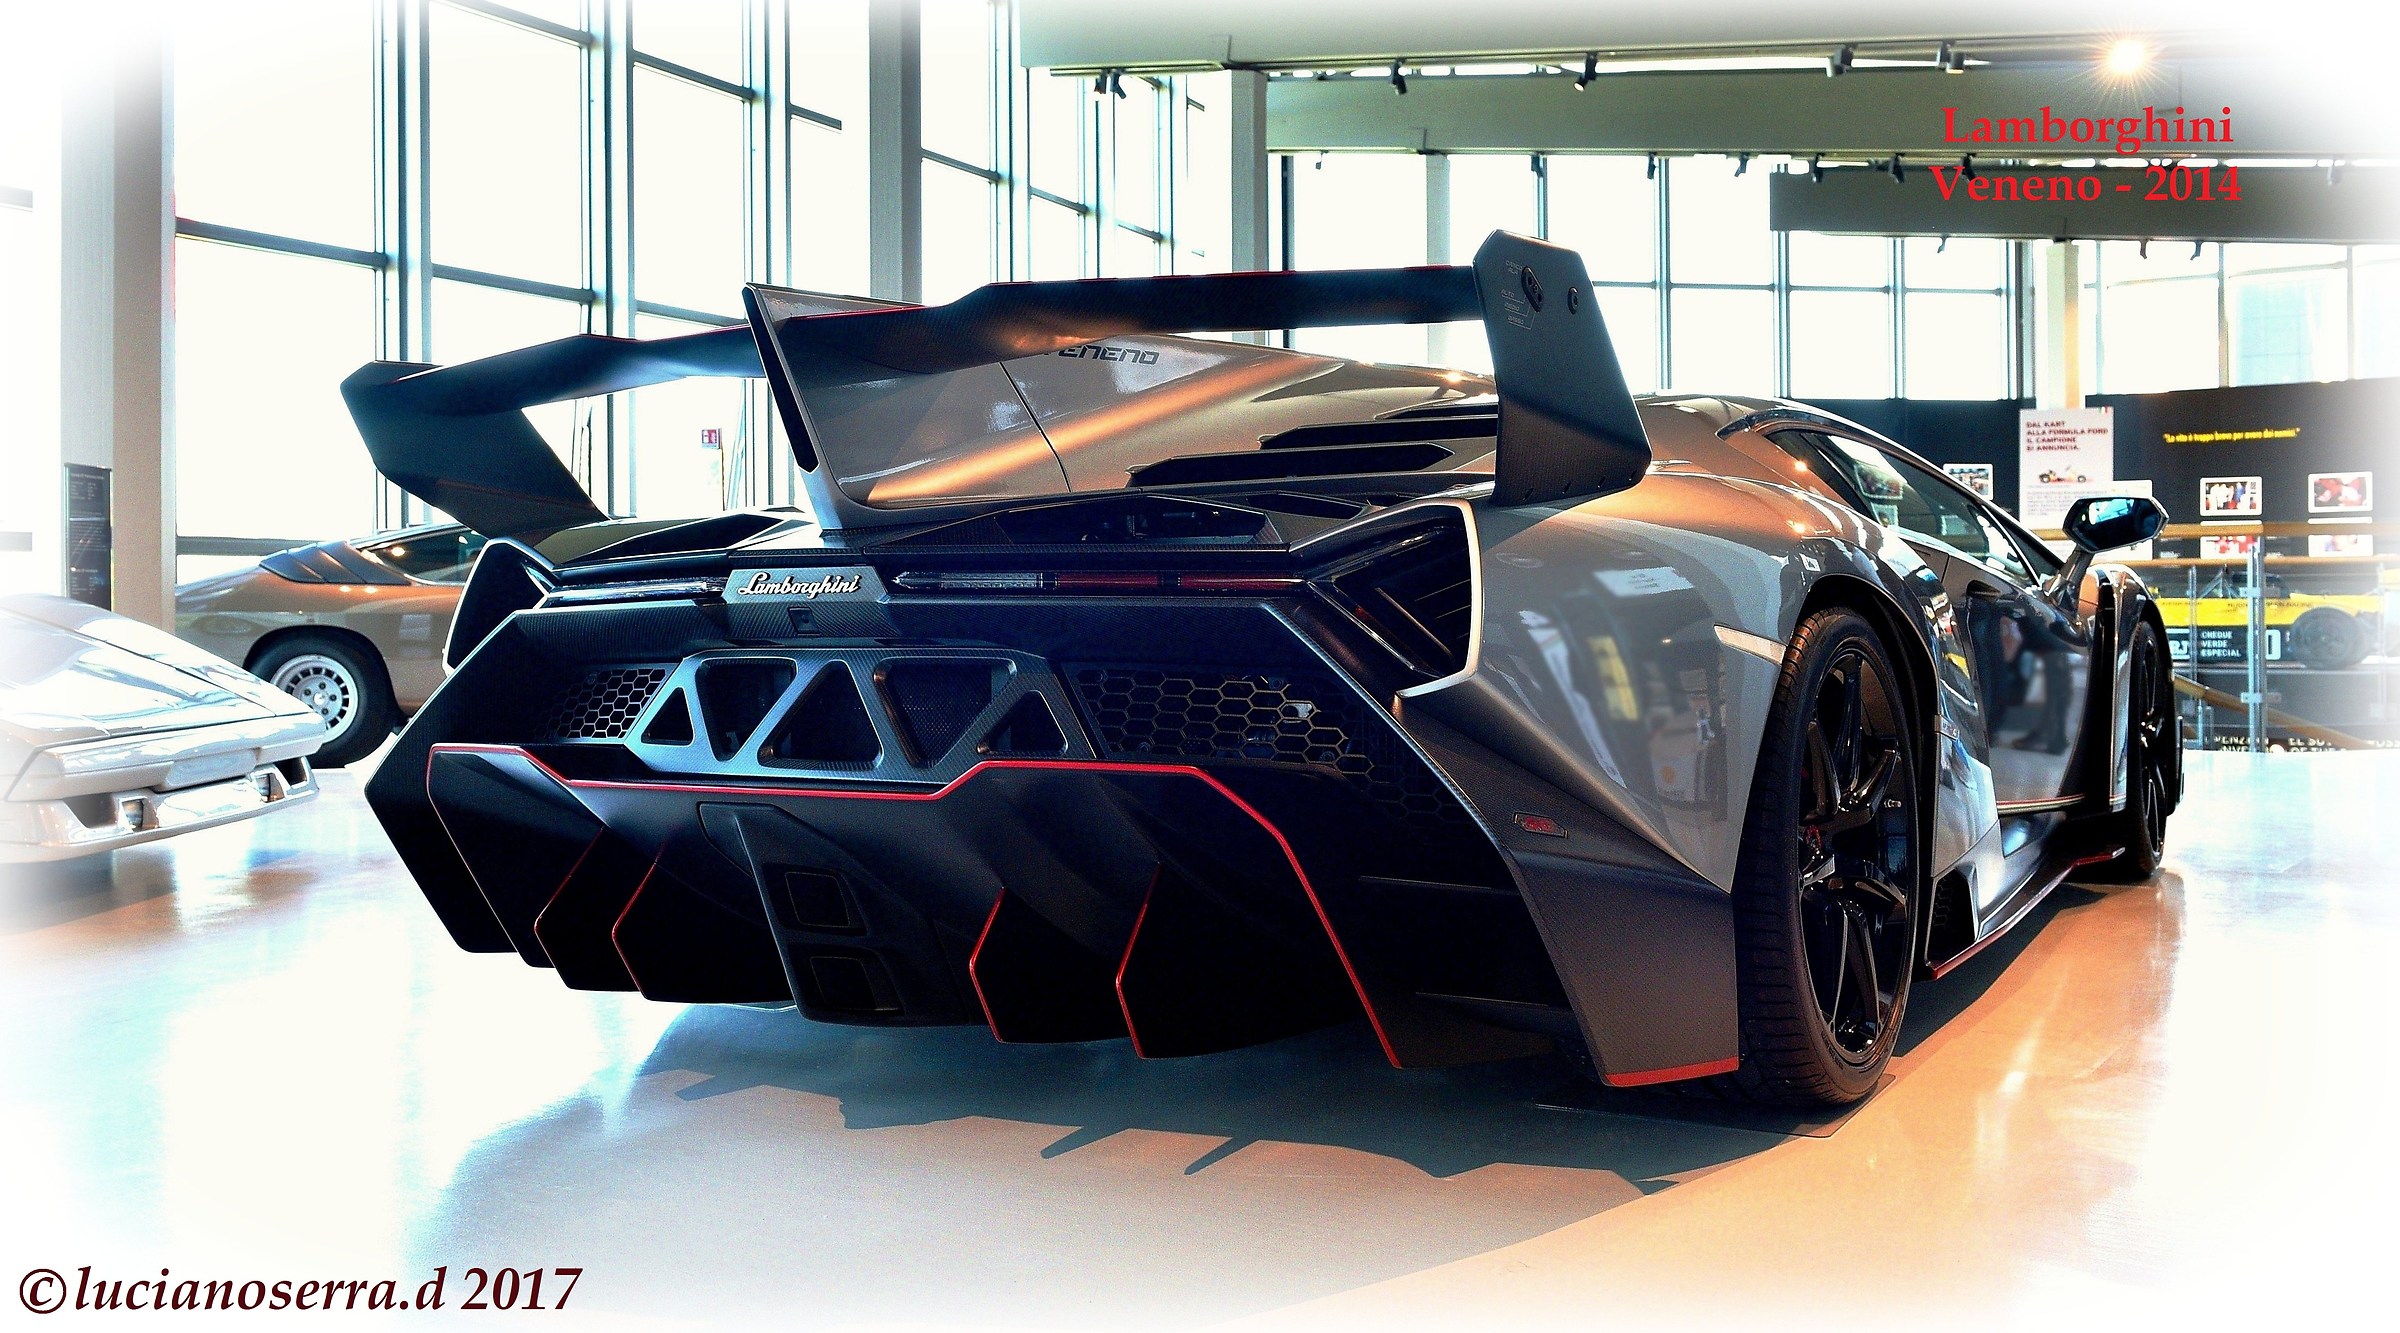 Lamborghini Veneno - 2014...